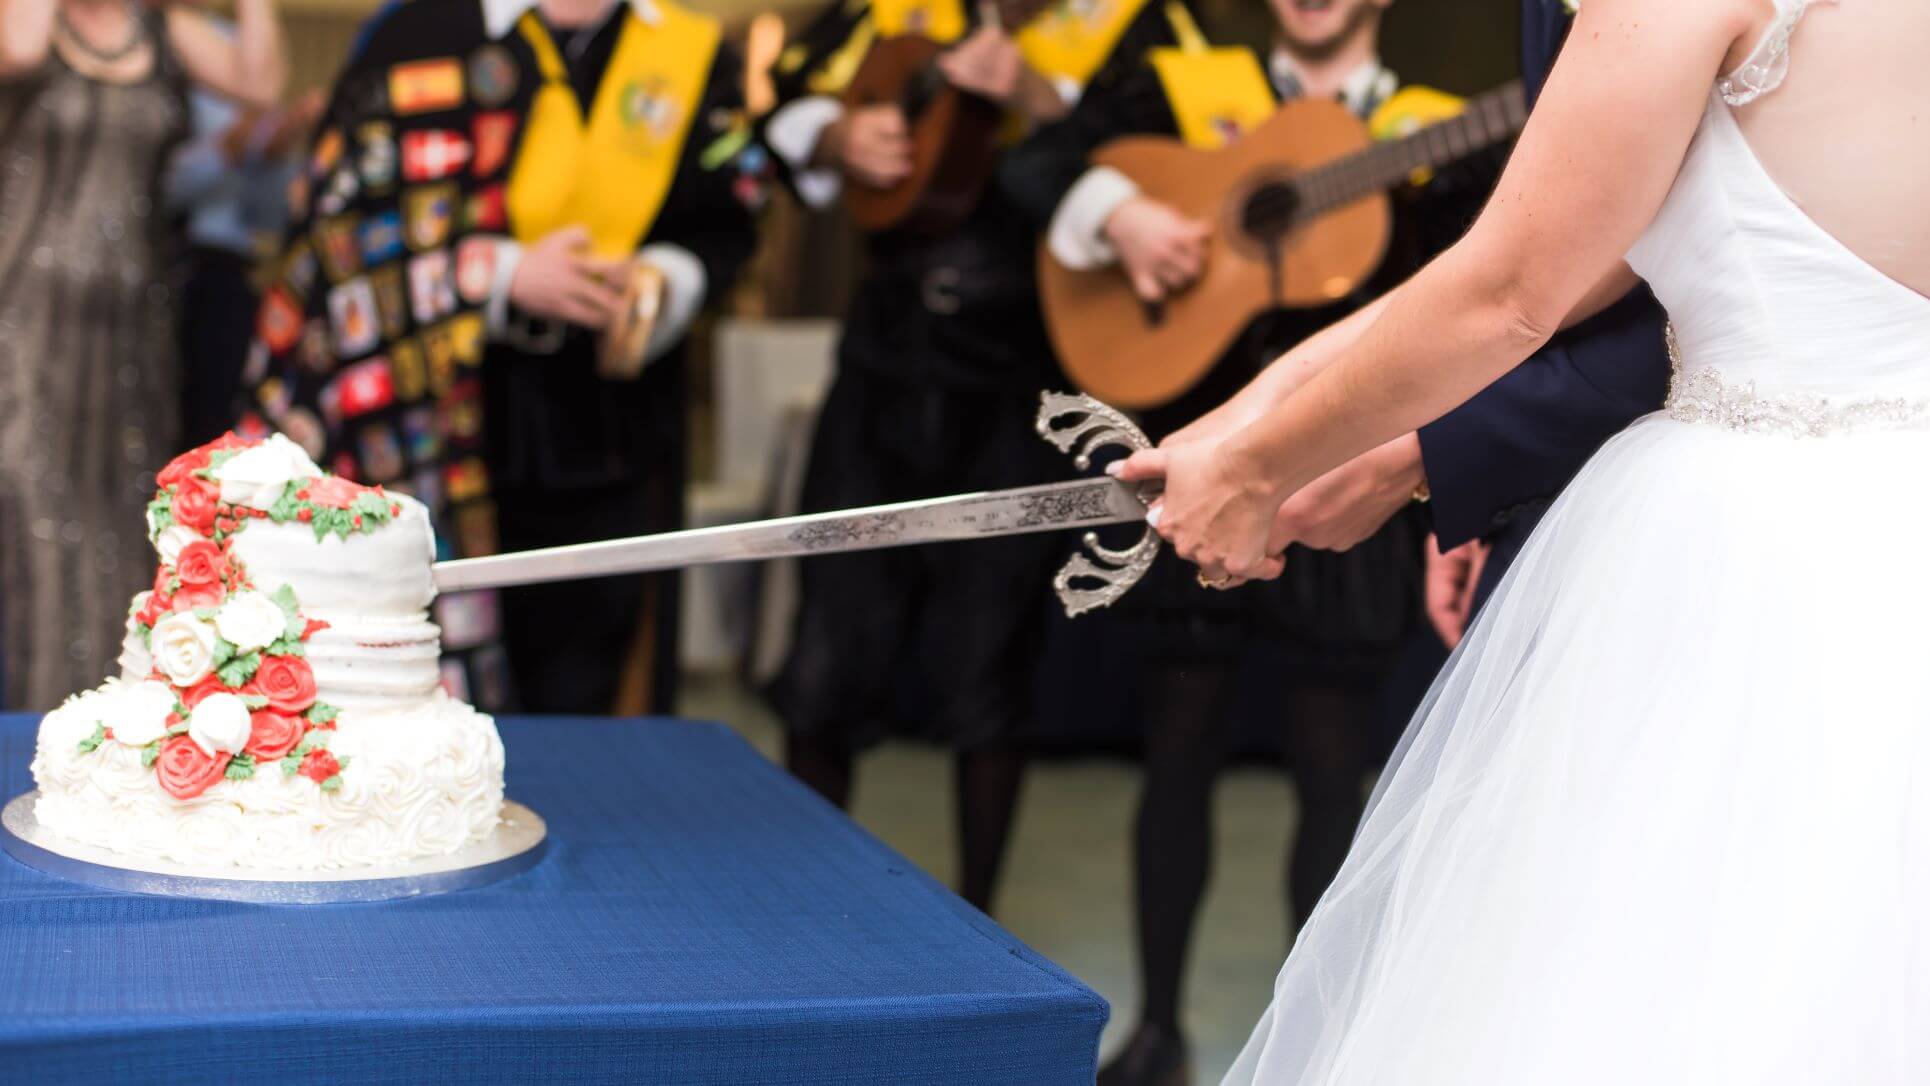 https://www.myidealwedding.co.uk/wp-content/uploads/2021/09/Spanish-Bride-Cuts-cake-with-a-sword.jpeg